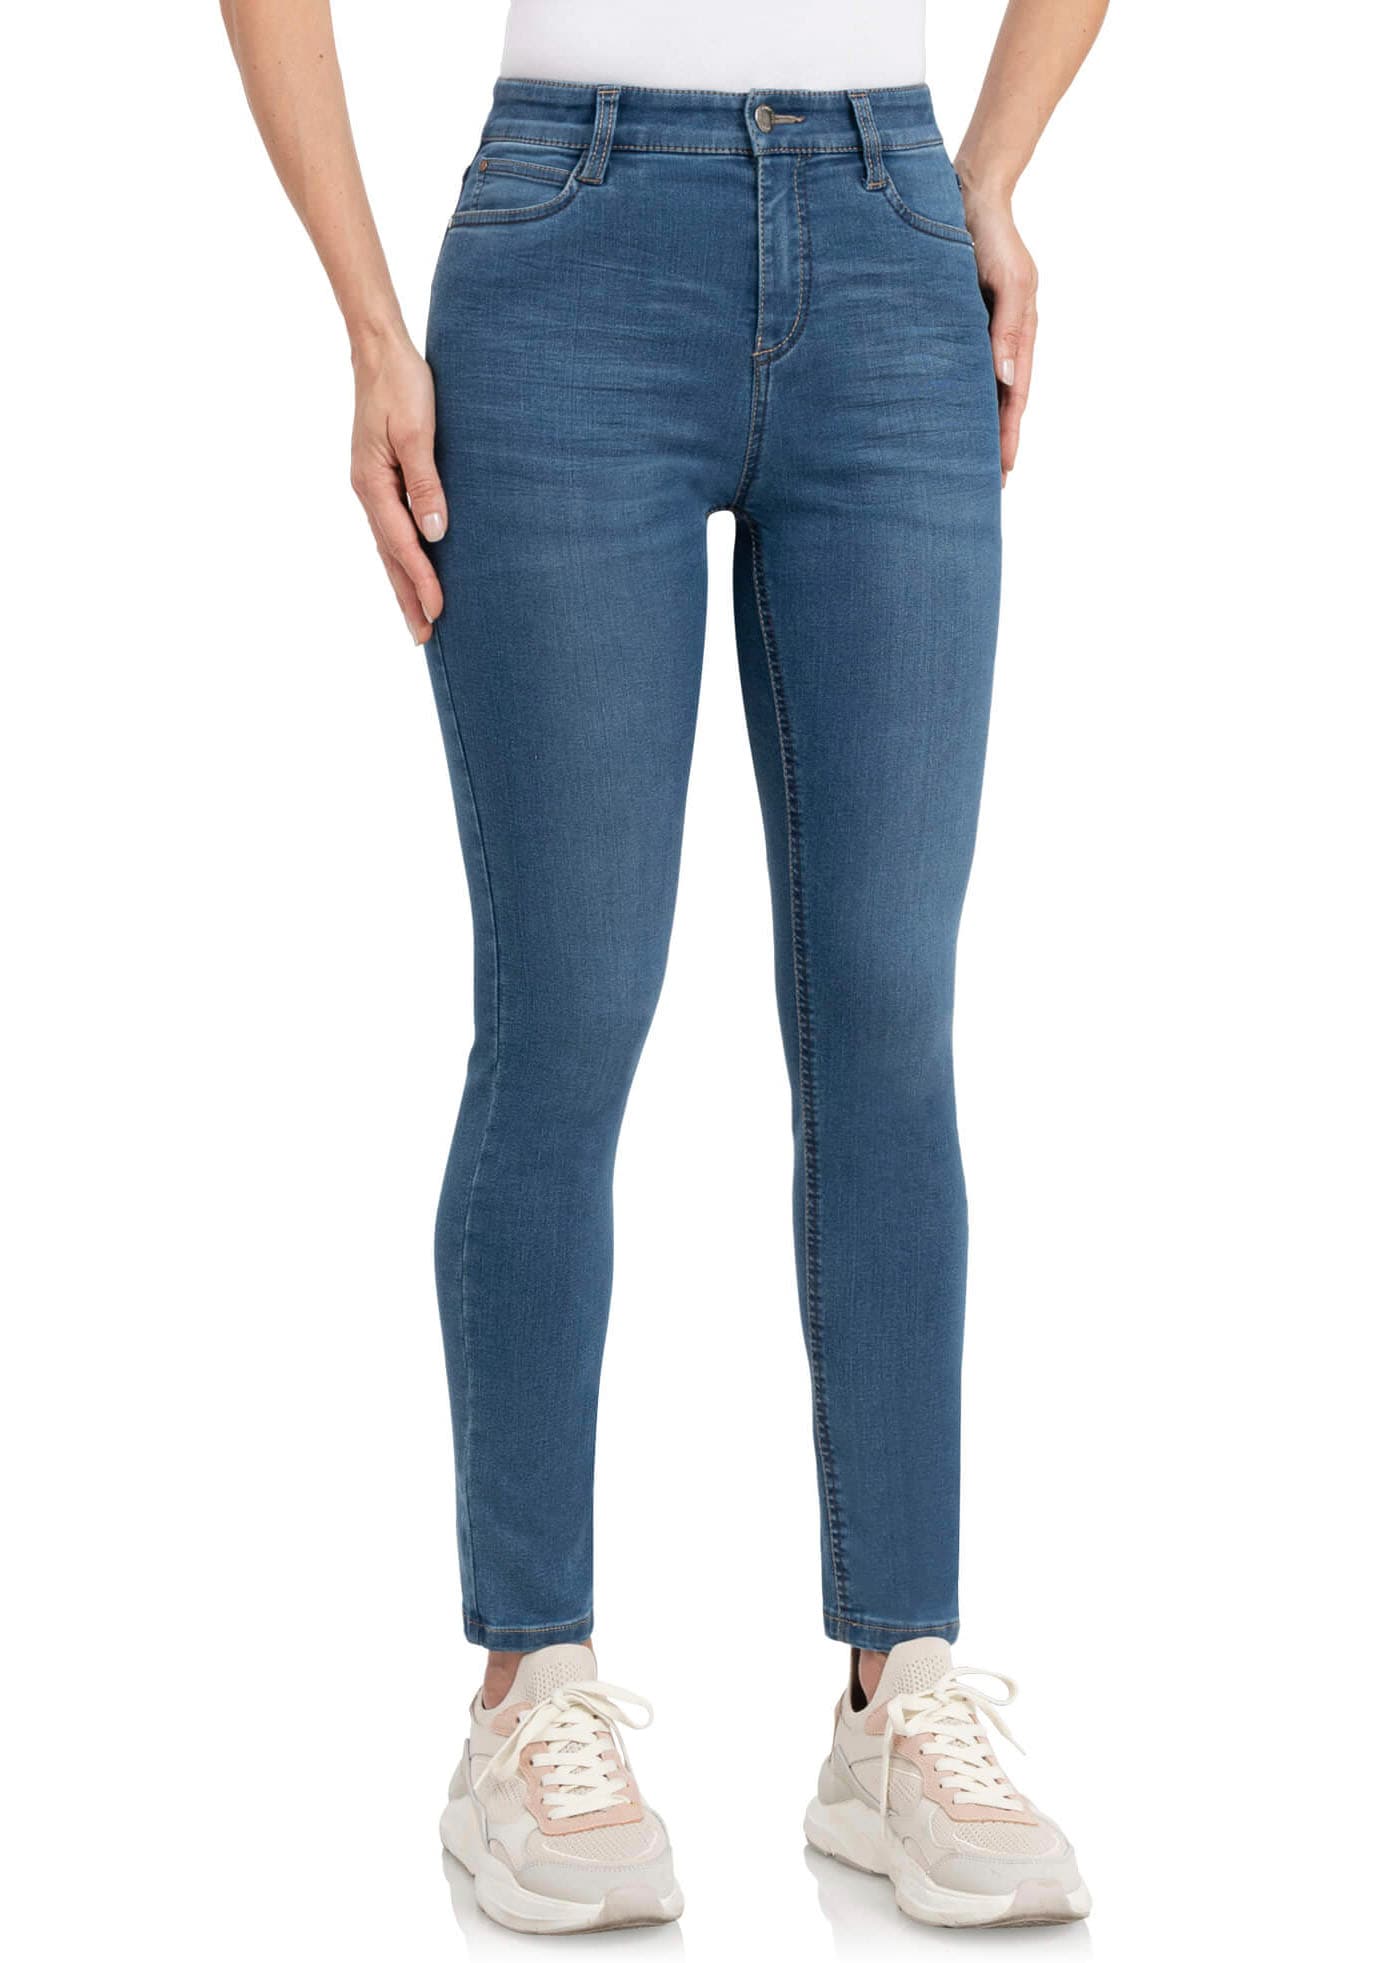 wonderjeans High-waist-Jeans »High Waist WH72«, Hoch geschnitten mit leicht verkürztem Bein